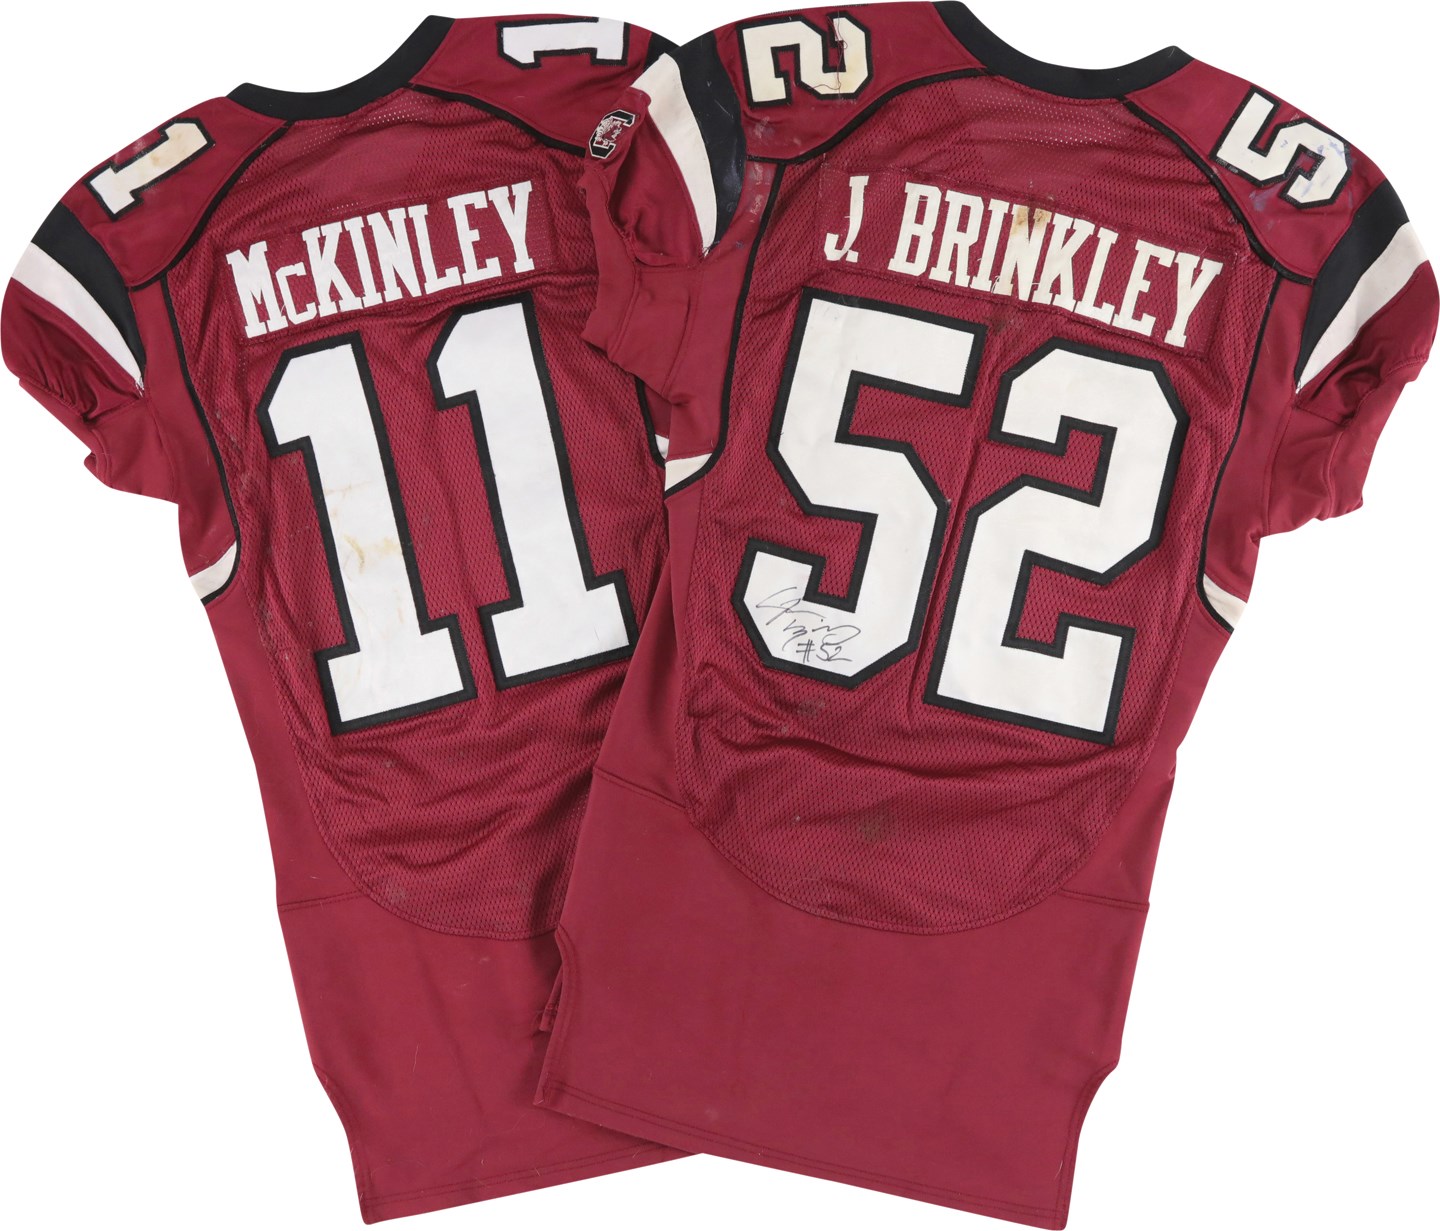 Circa 2007 Kenny McKinley and Jasper Brinkley South Carolina Co-Captains Game Worn Jerseys